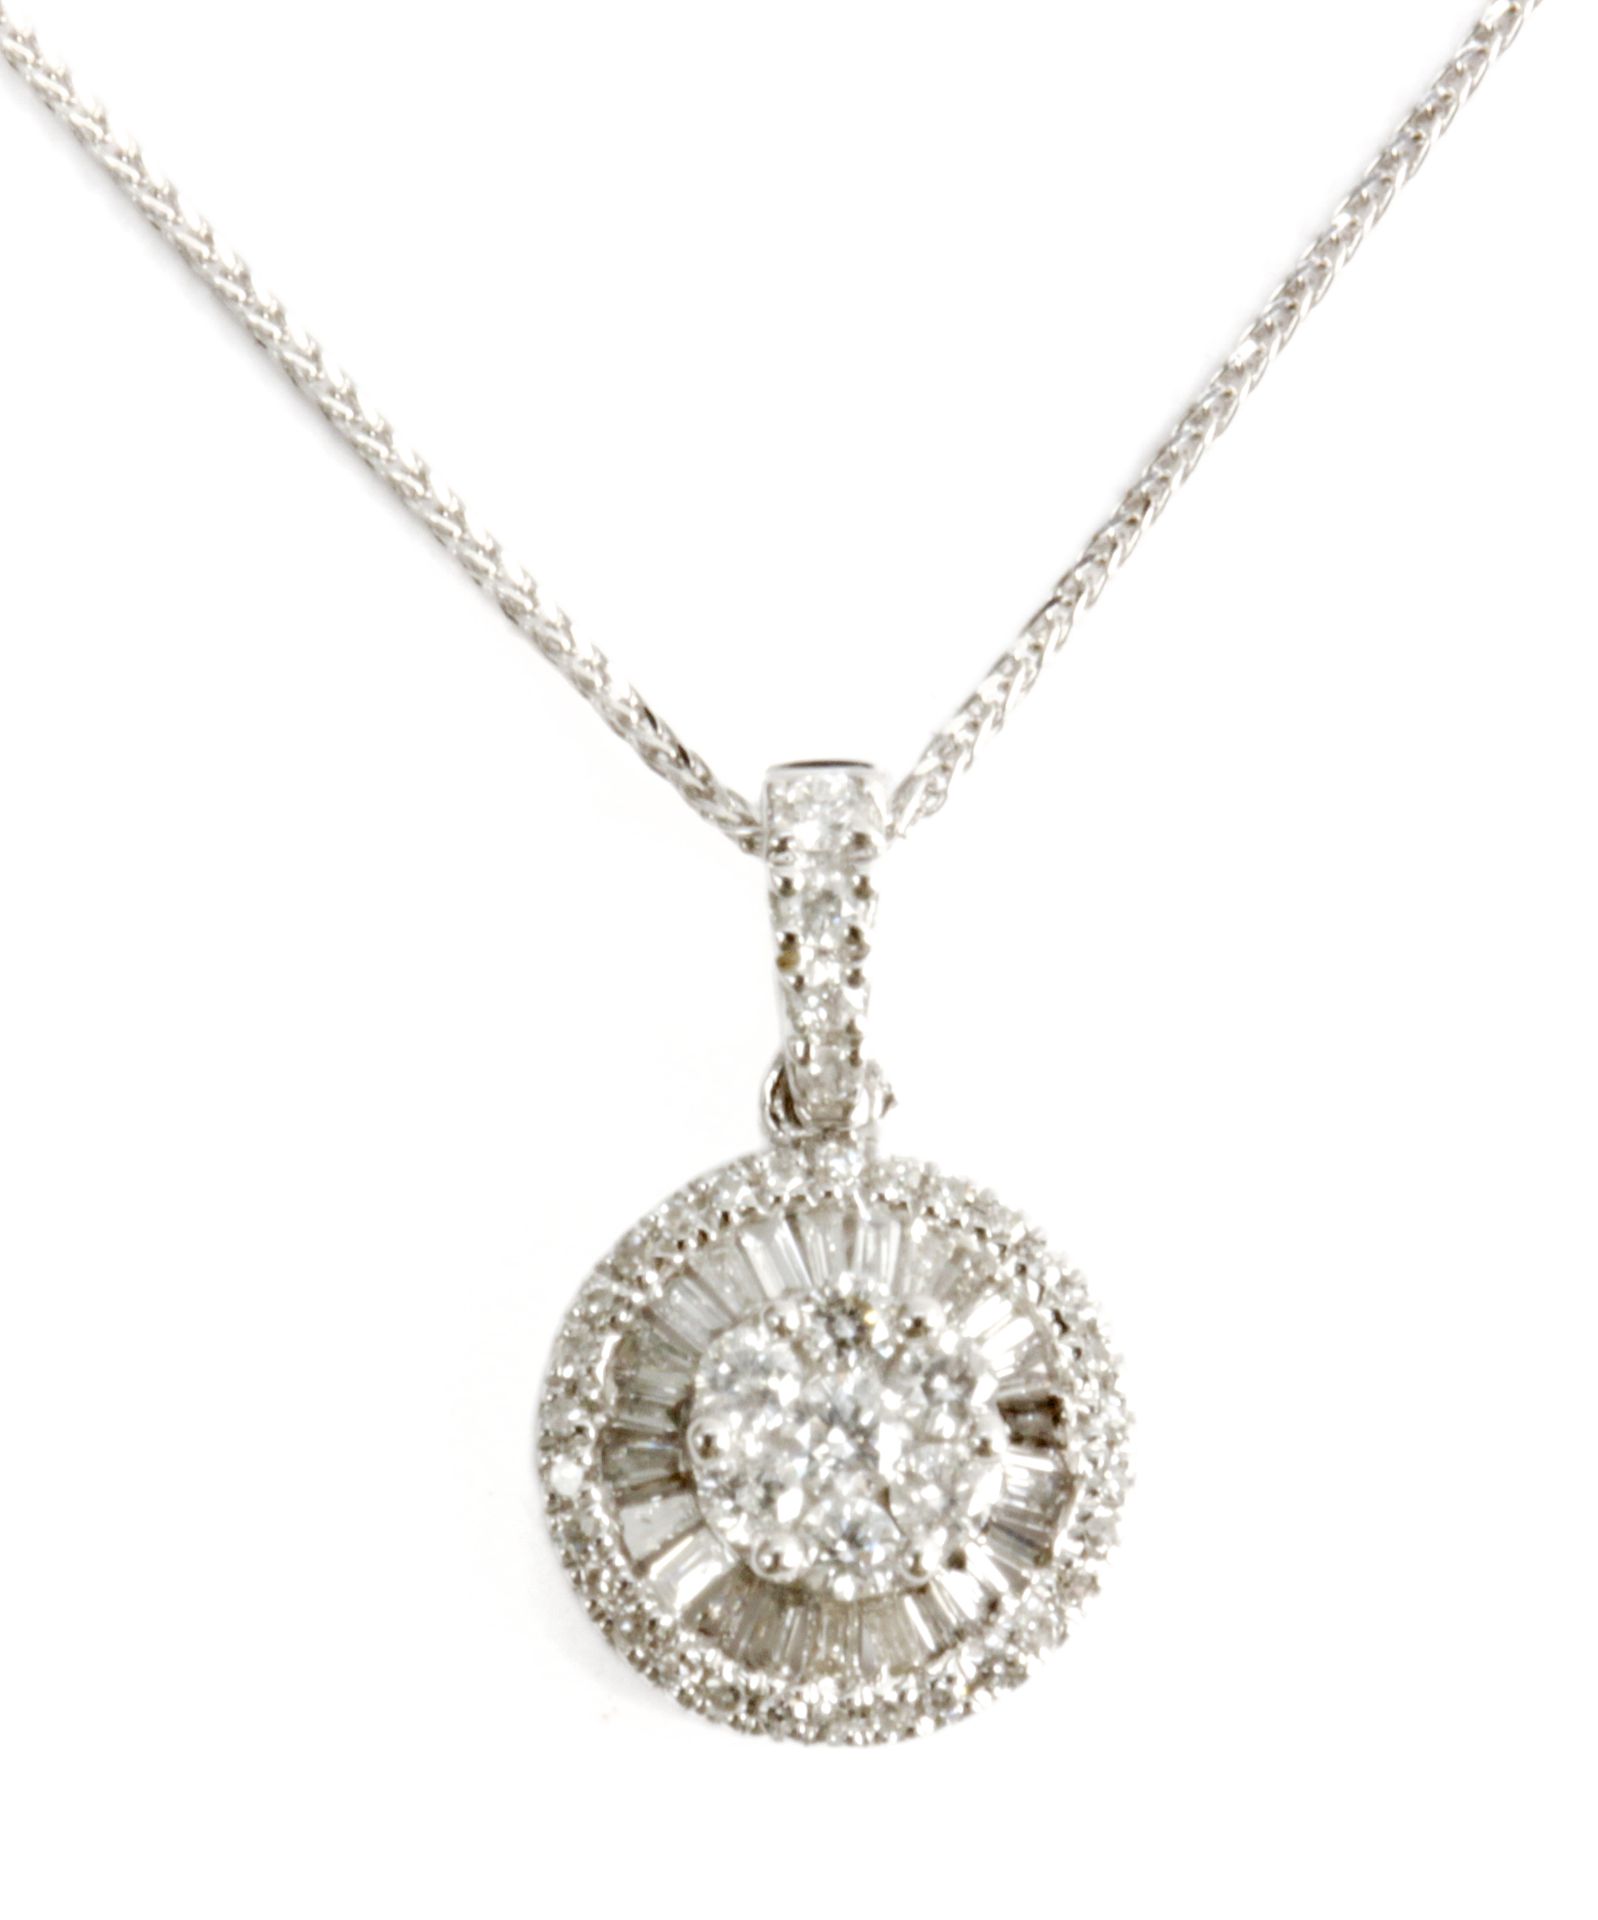 18k. white gold, brilliant cut and baguette cut diamonds cluster pendant